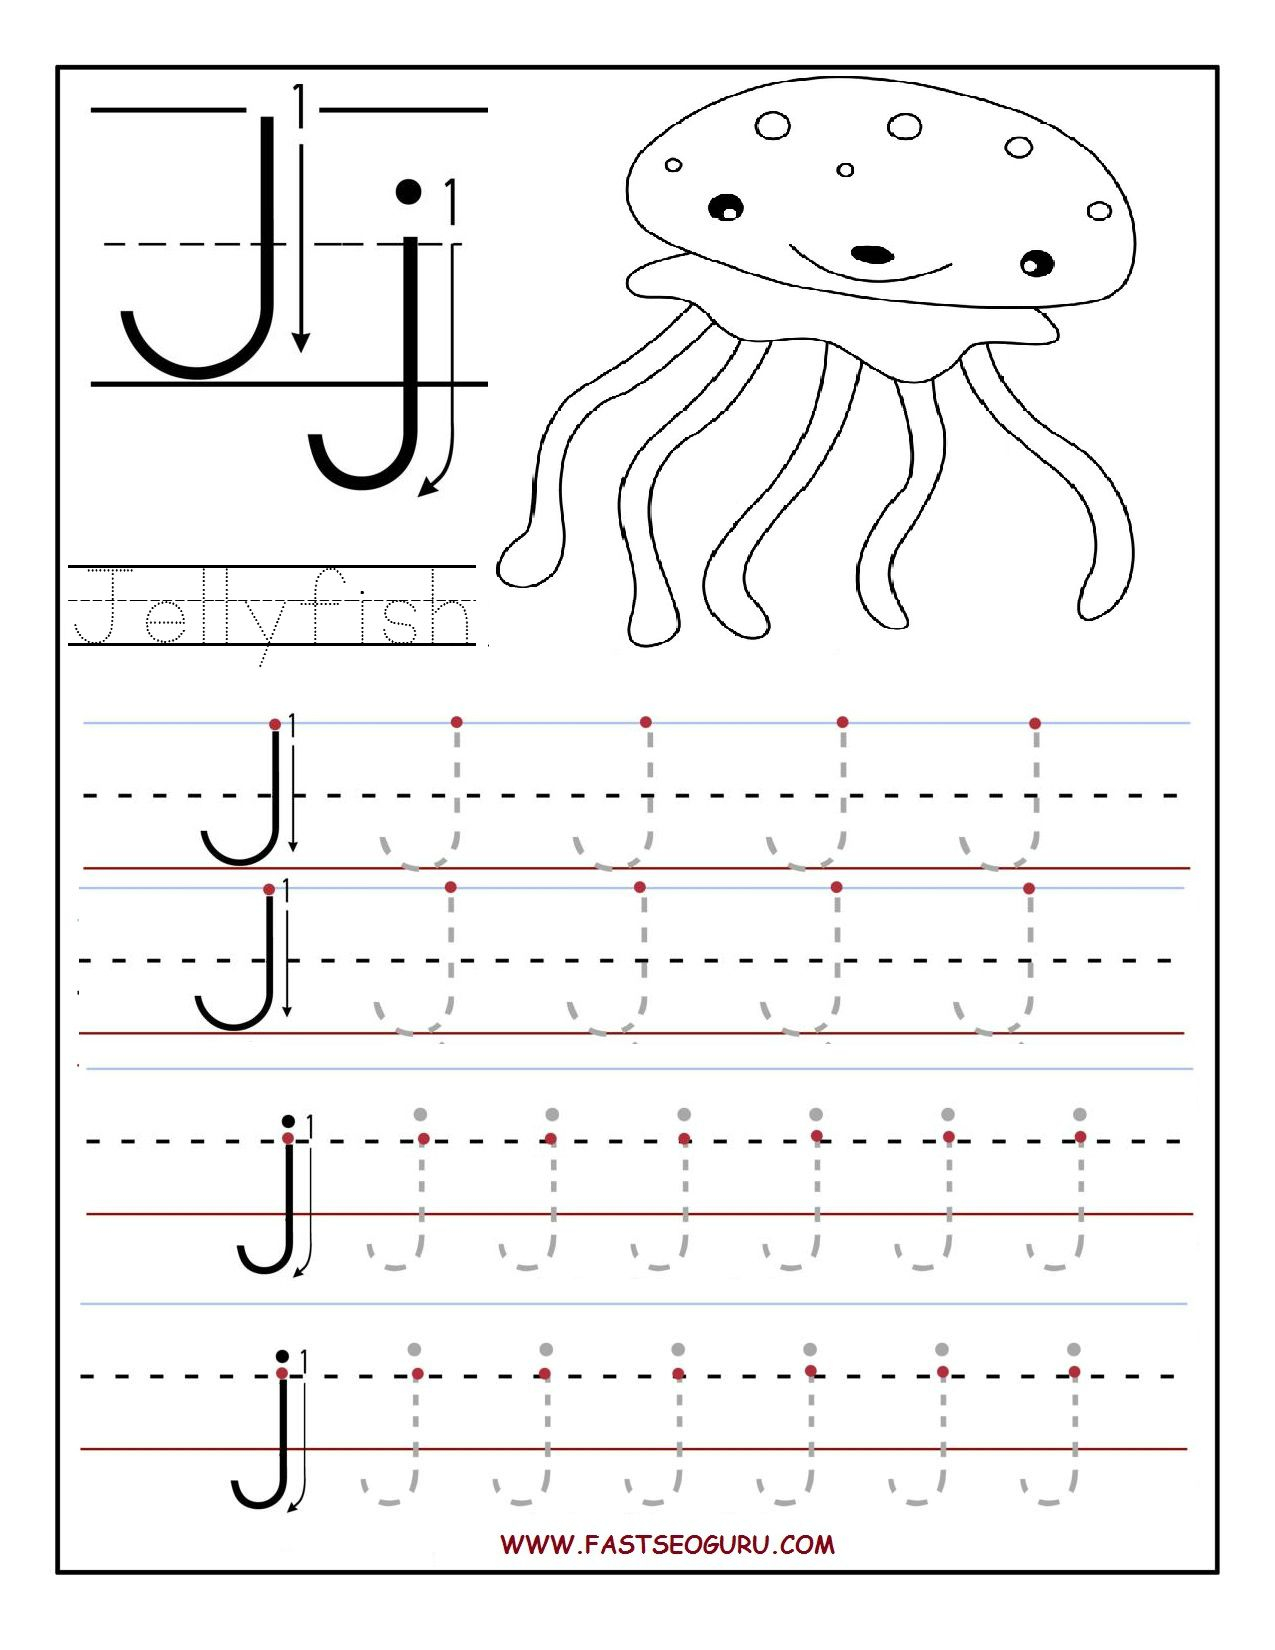 Printable Letter J Tracing Worksheets For Preschool inside Letter J Tracing Worksheets Preschool